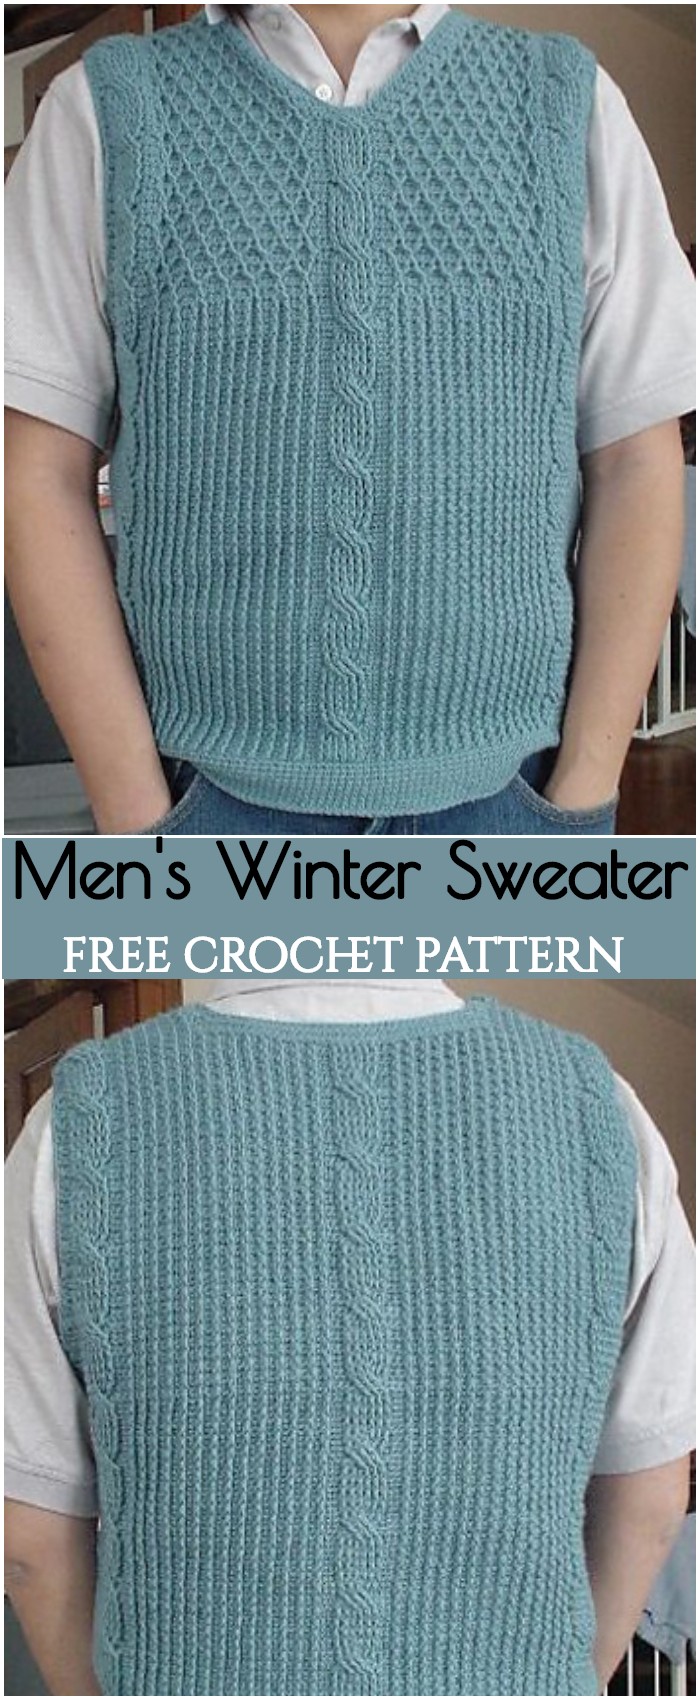 Crochet Men's Winter Sweater